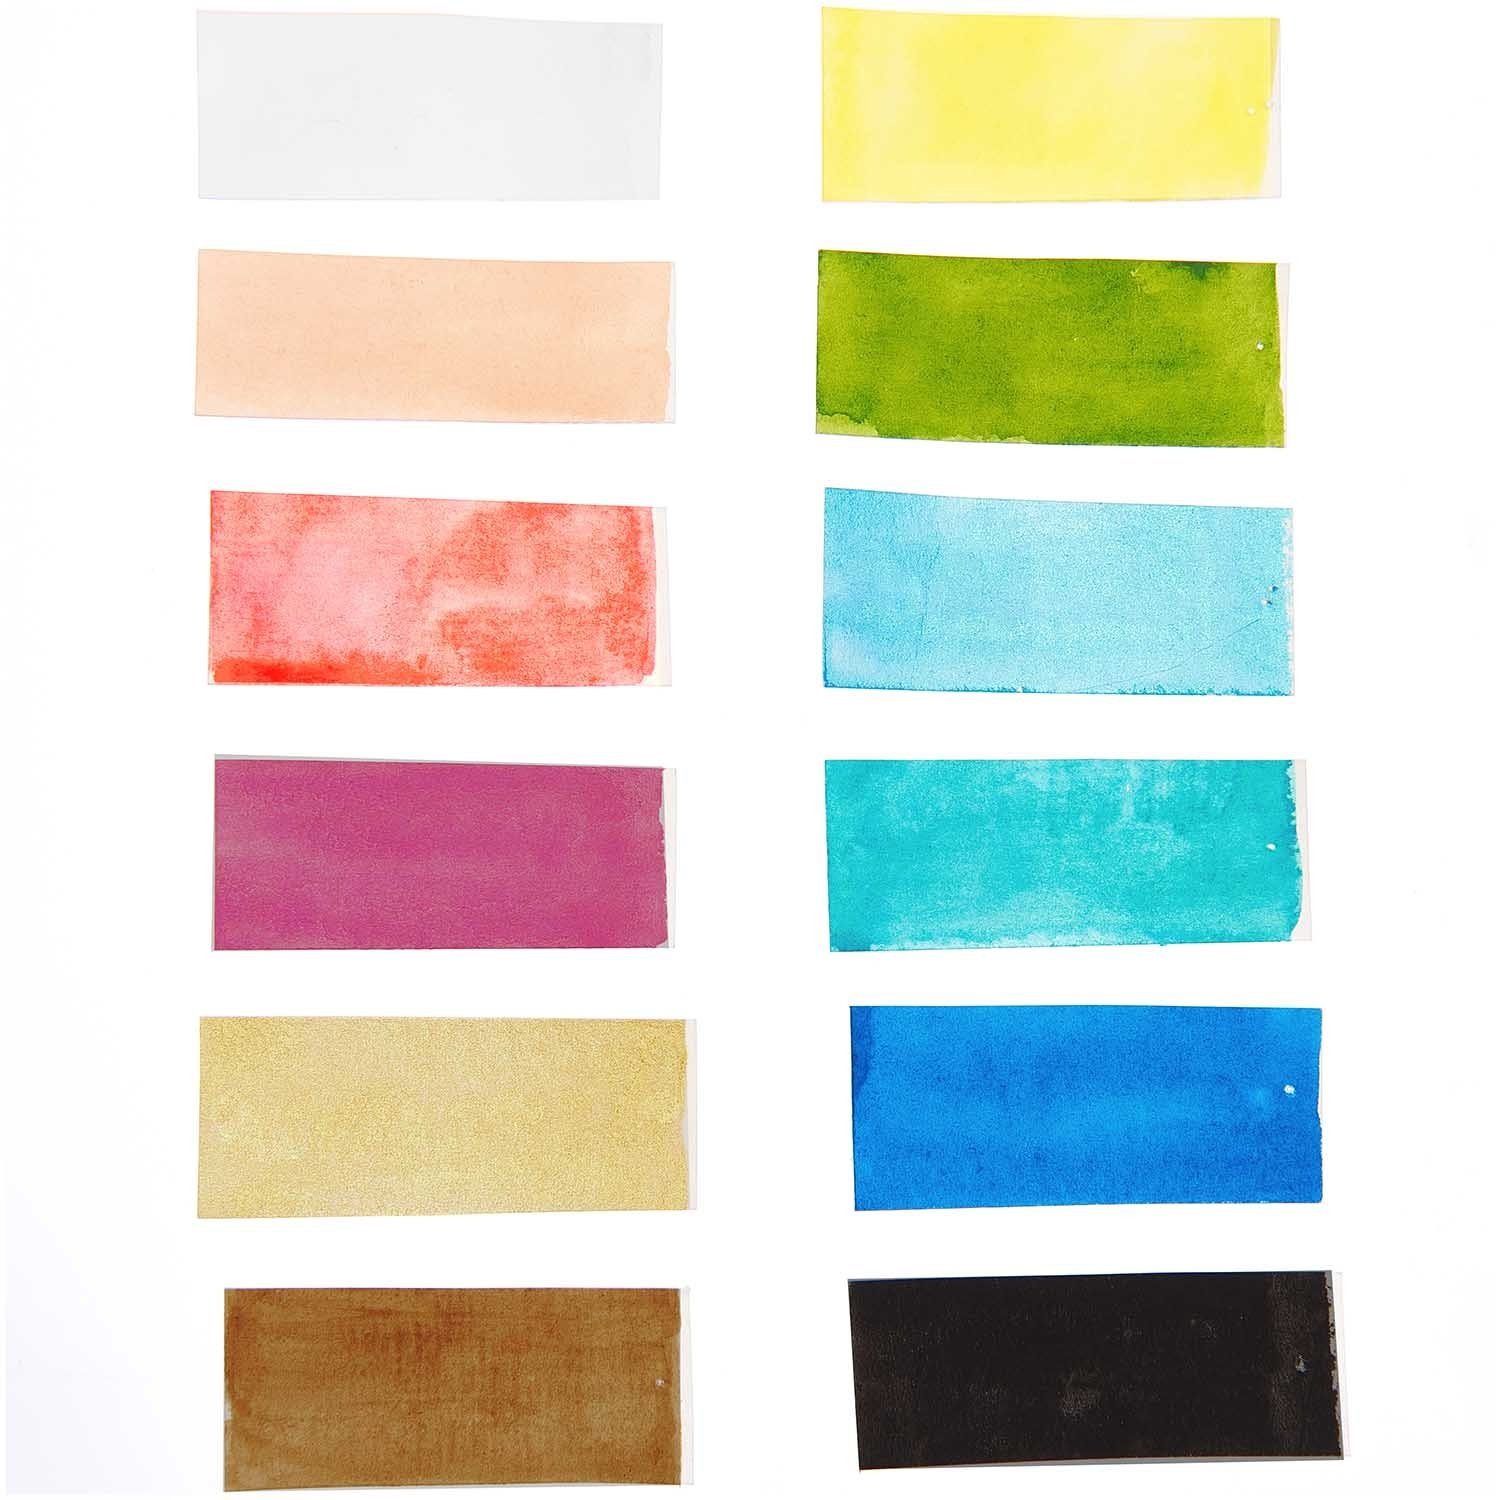 Metallkasten 12 inklusive 12,5 Pastell 7 ART cm Farben Essential Aquarellfarbe Aquarellfarben, Design x Rico cm